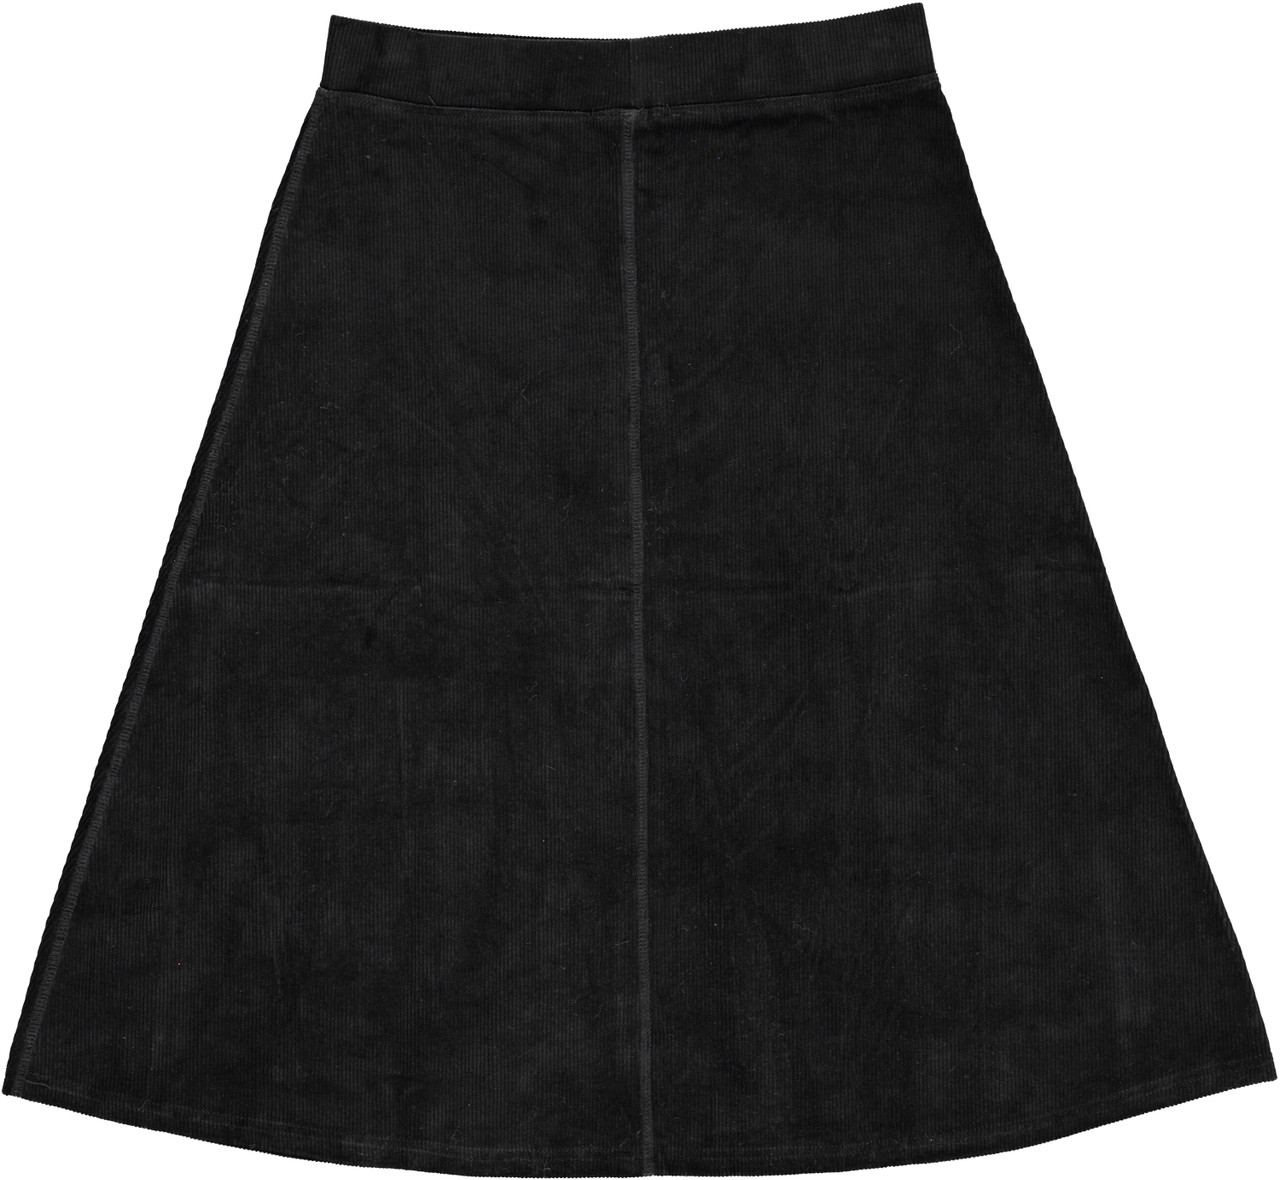 Women/Teens 25/27 Inches Corduroy A-line Skirt - Double Header USA